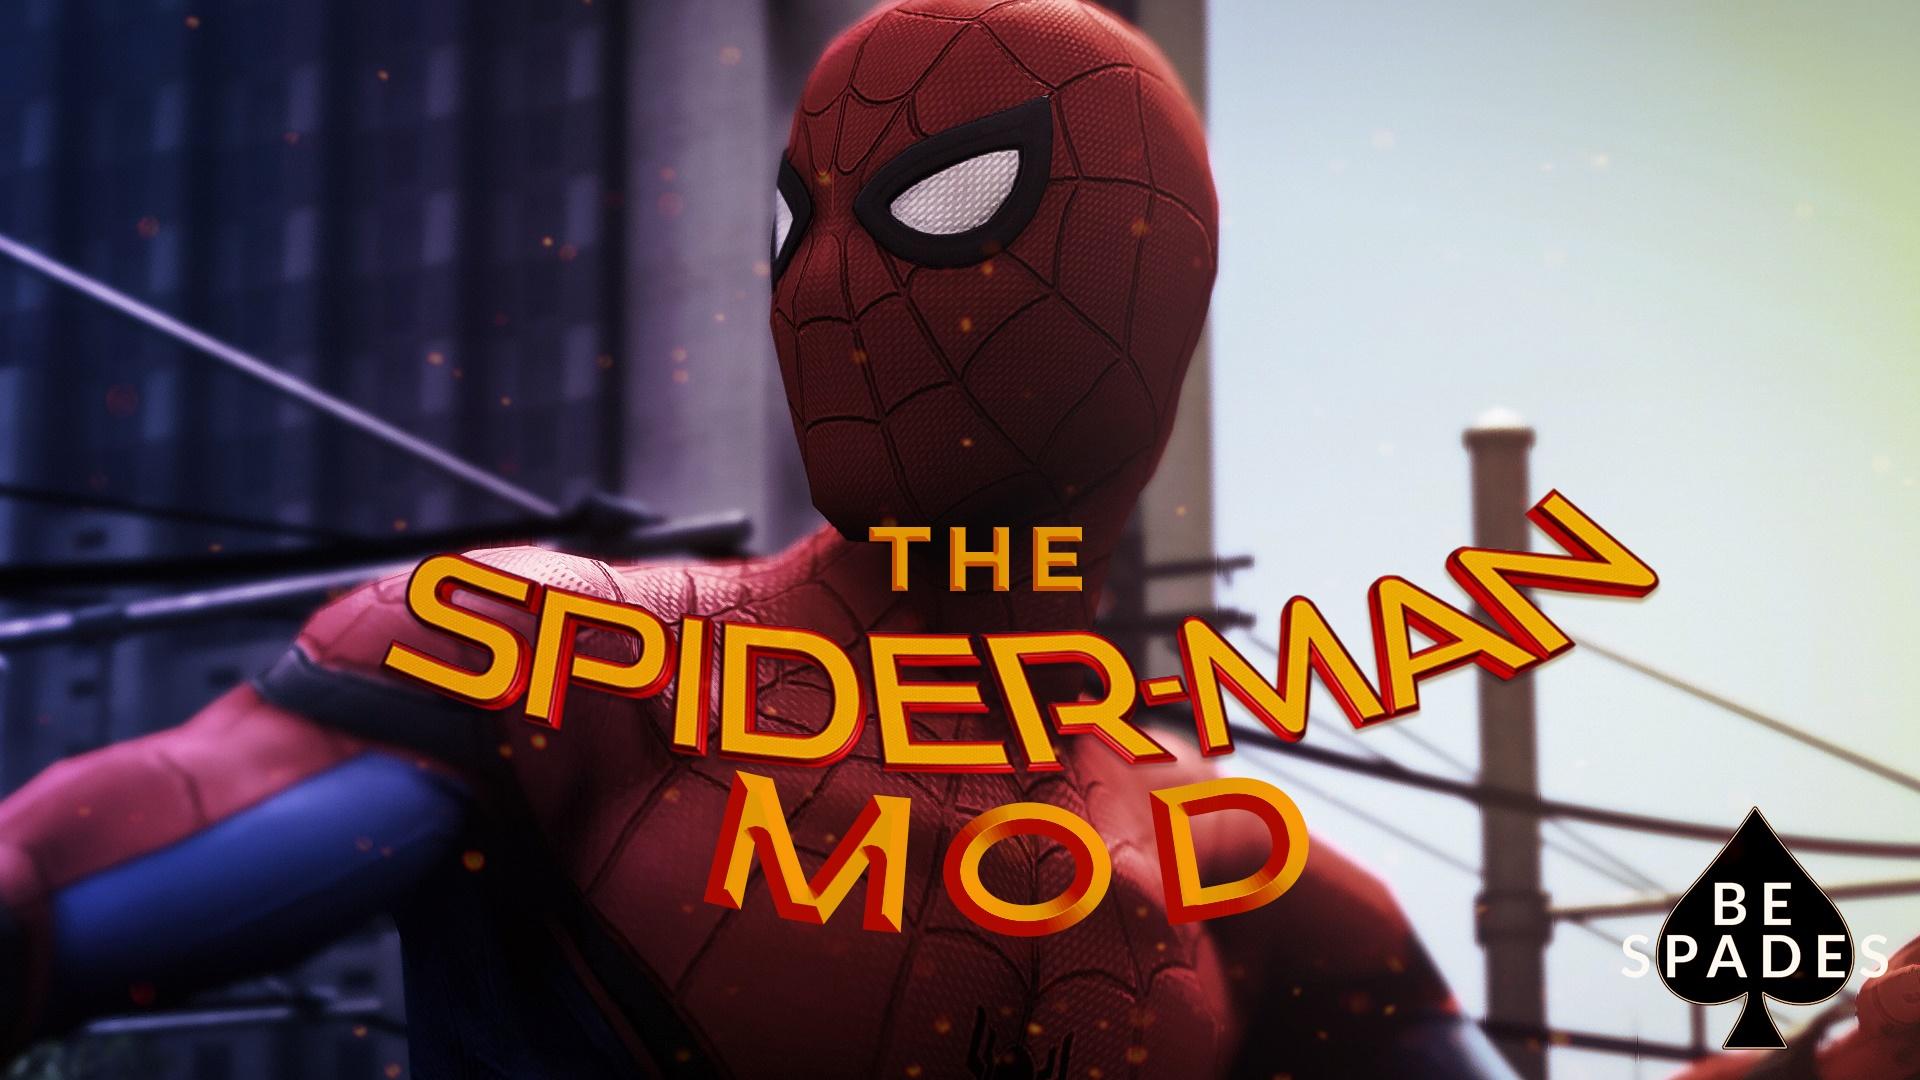 Download marvel spider man pc build in emulator free pc